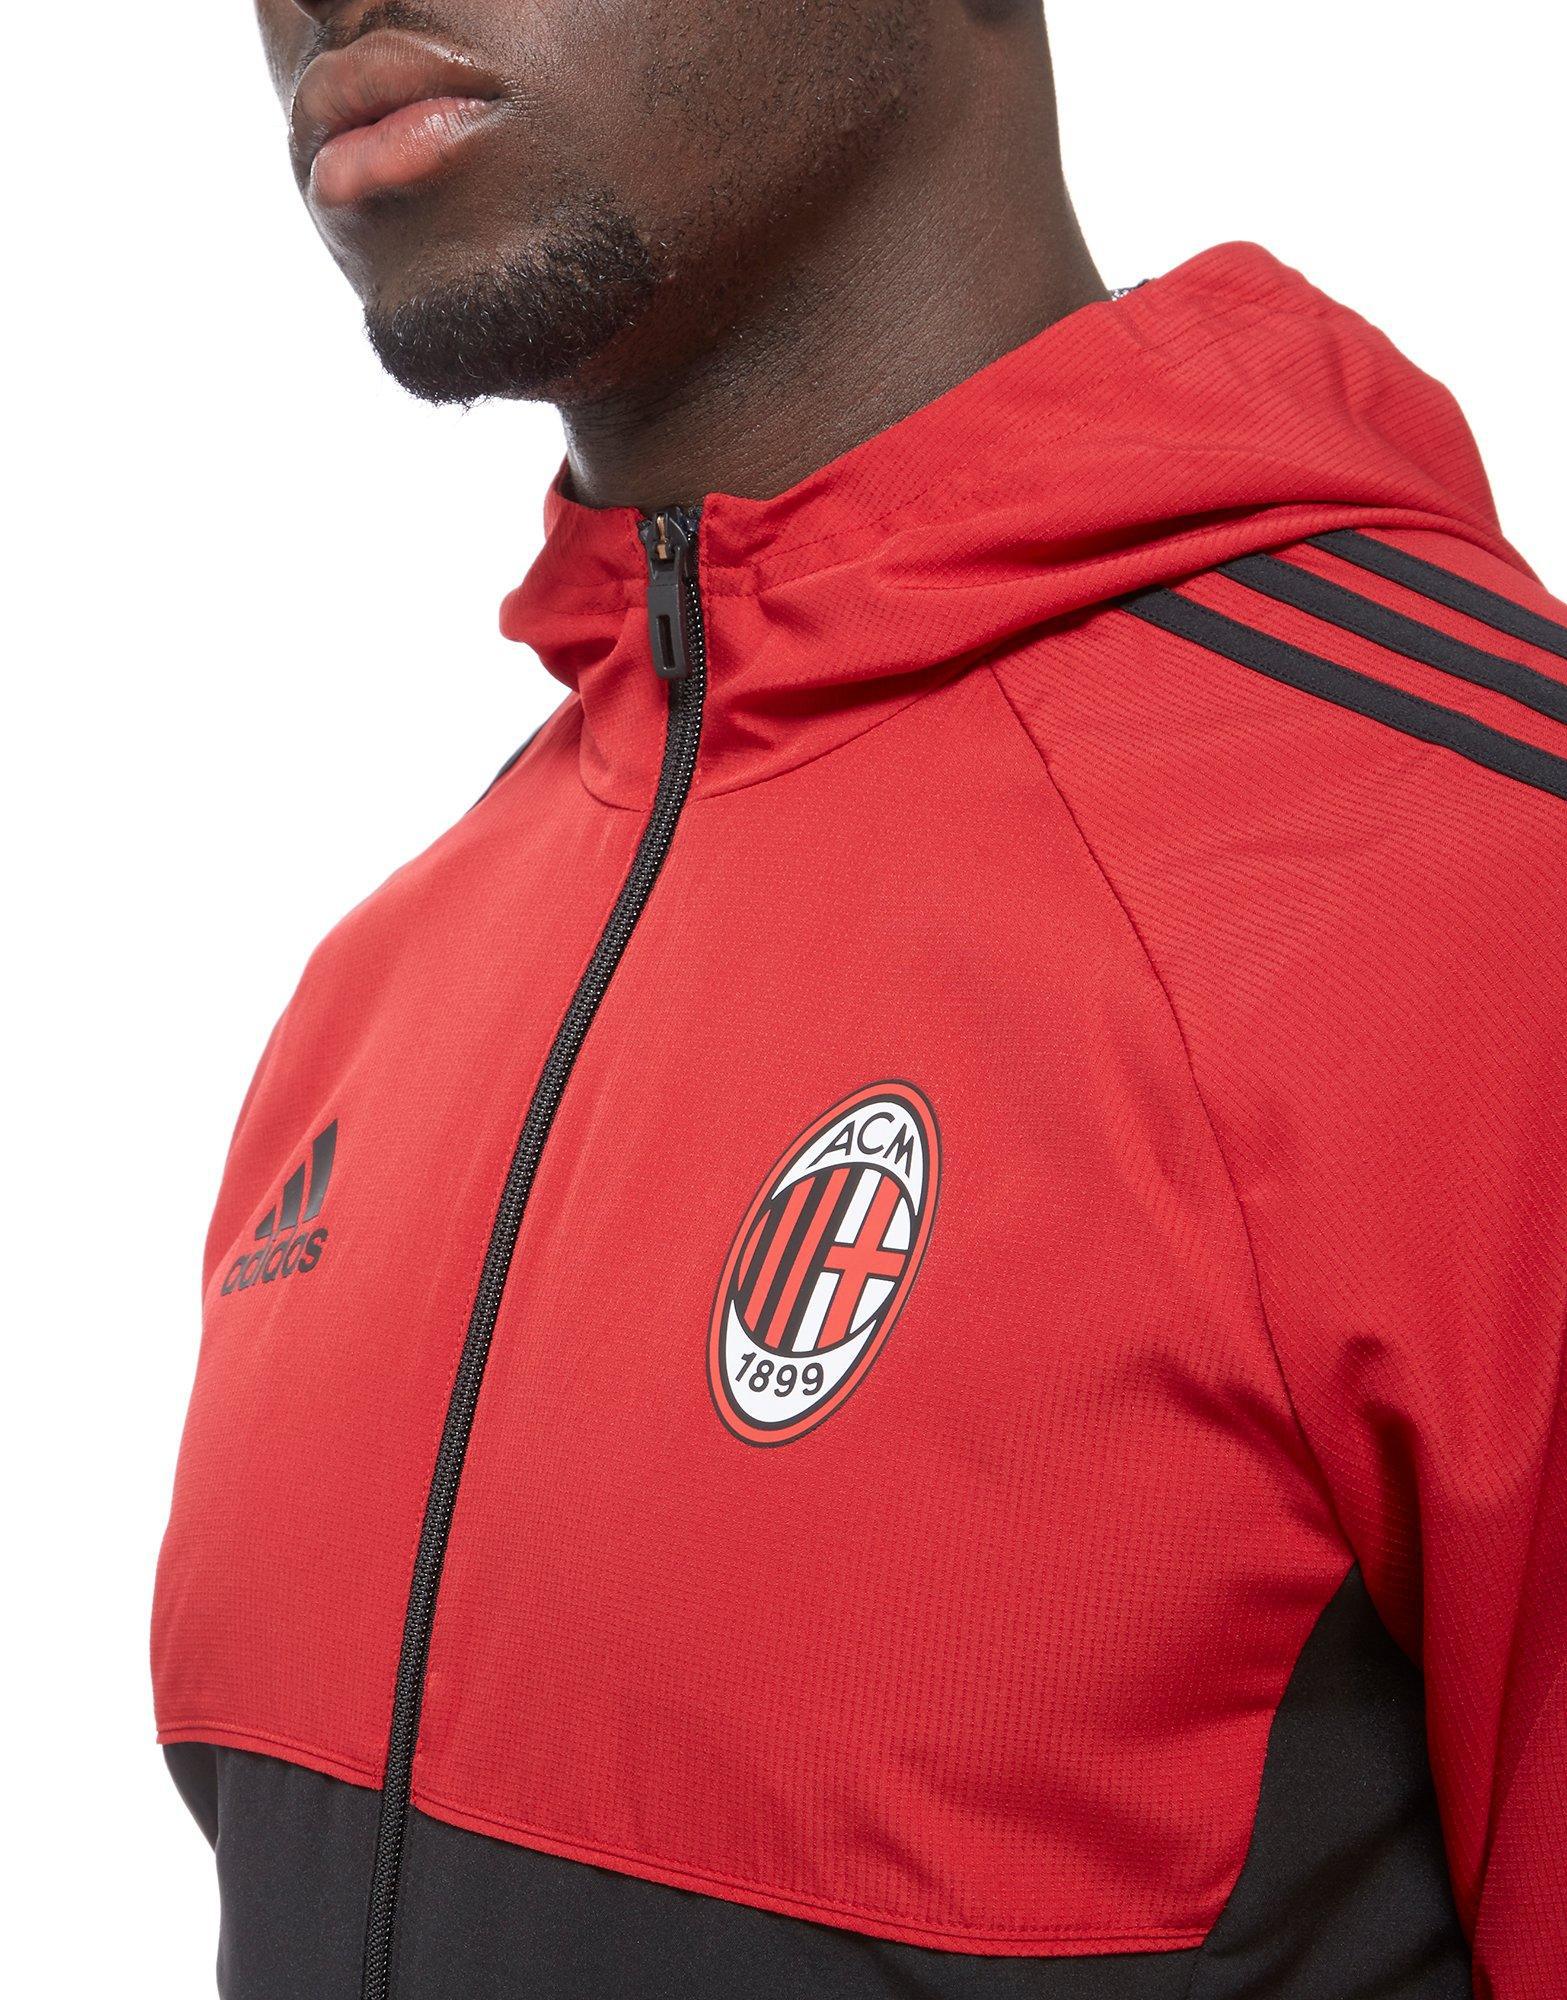 adidas Ac Milan Presentation Jacket in Red for Men - Lyst